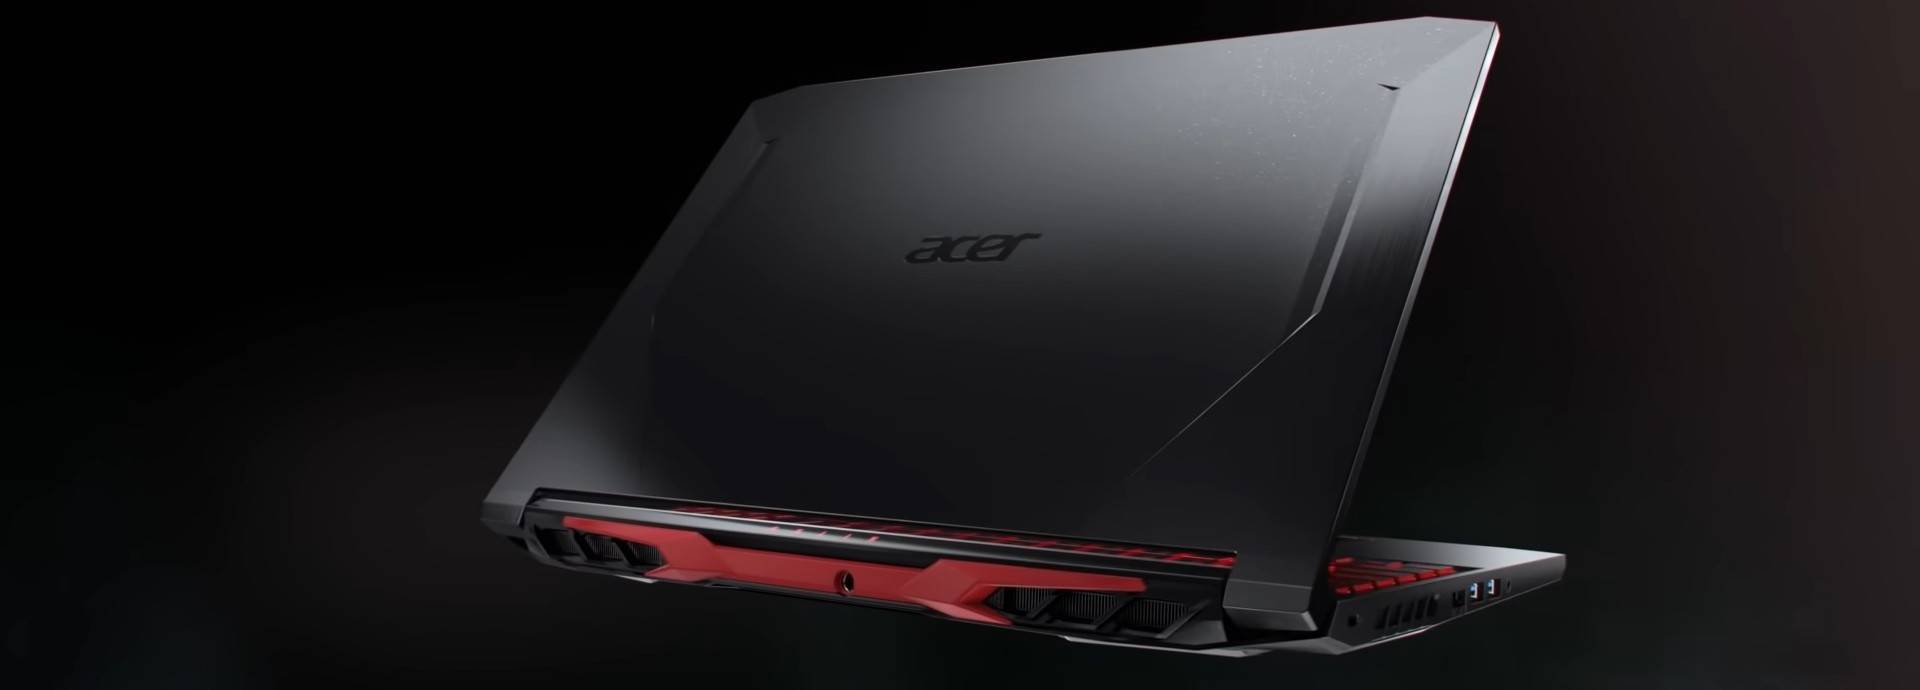 Portátil para juegos Acer Nitro 5 largo